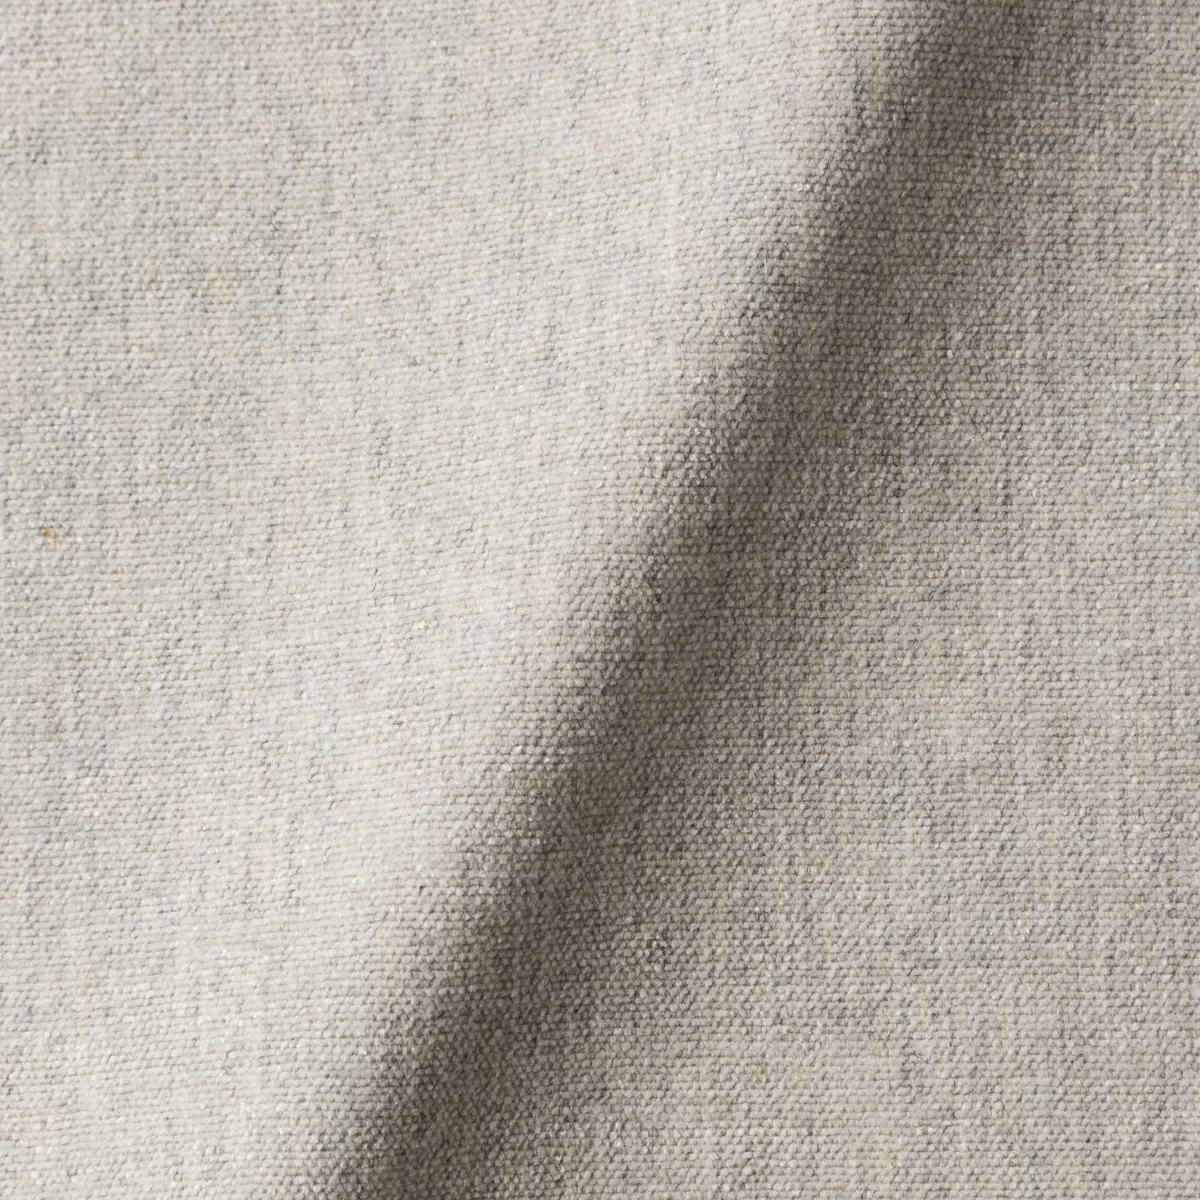 Fabric sample Liscio Nebia white